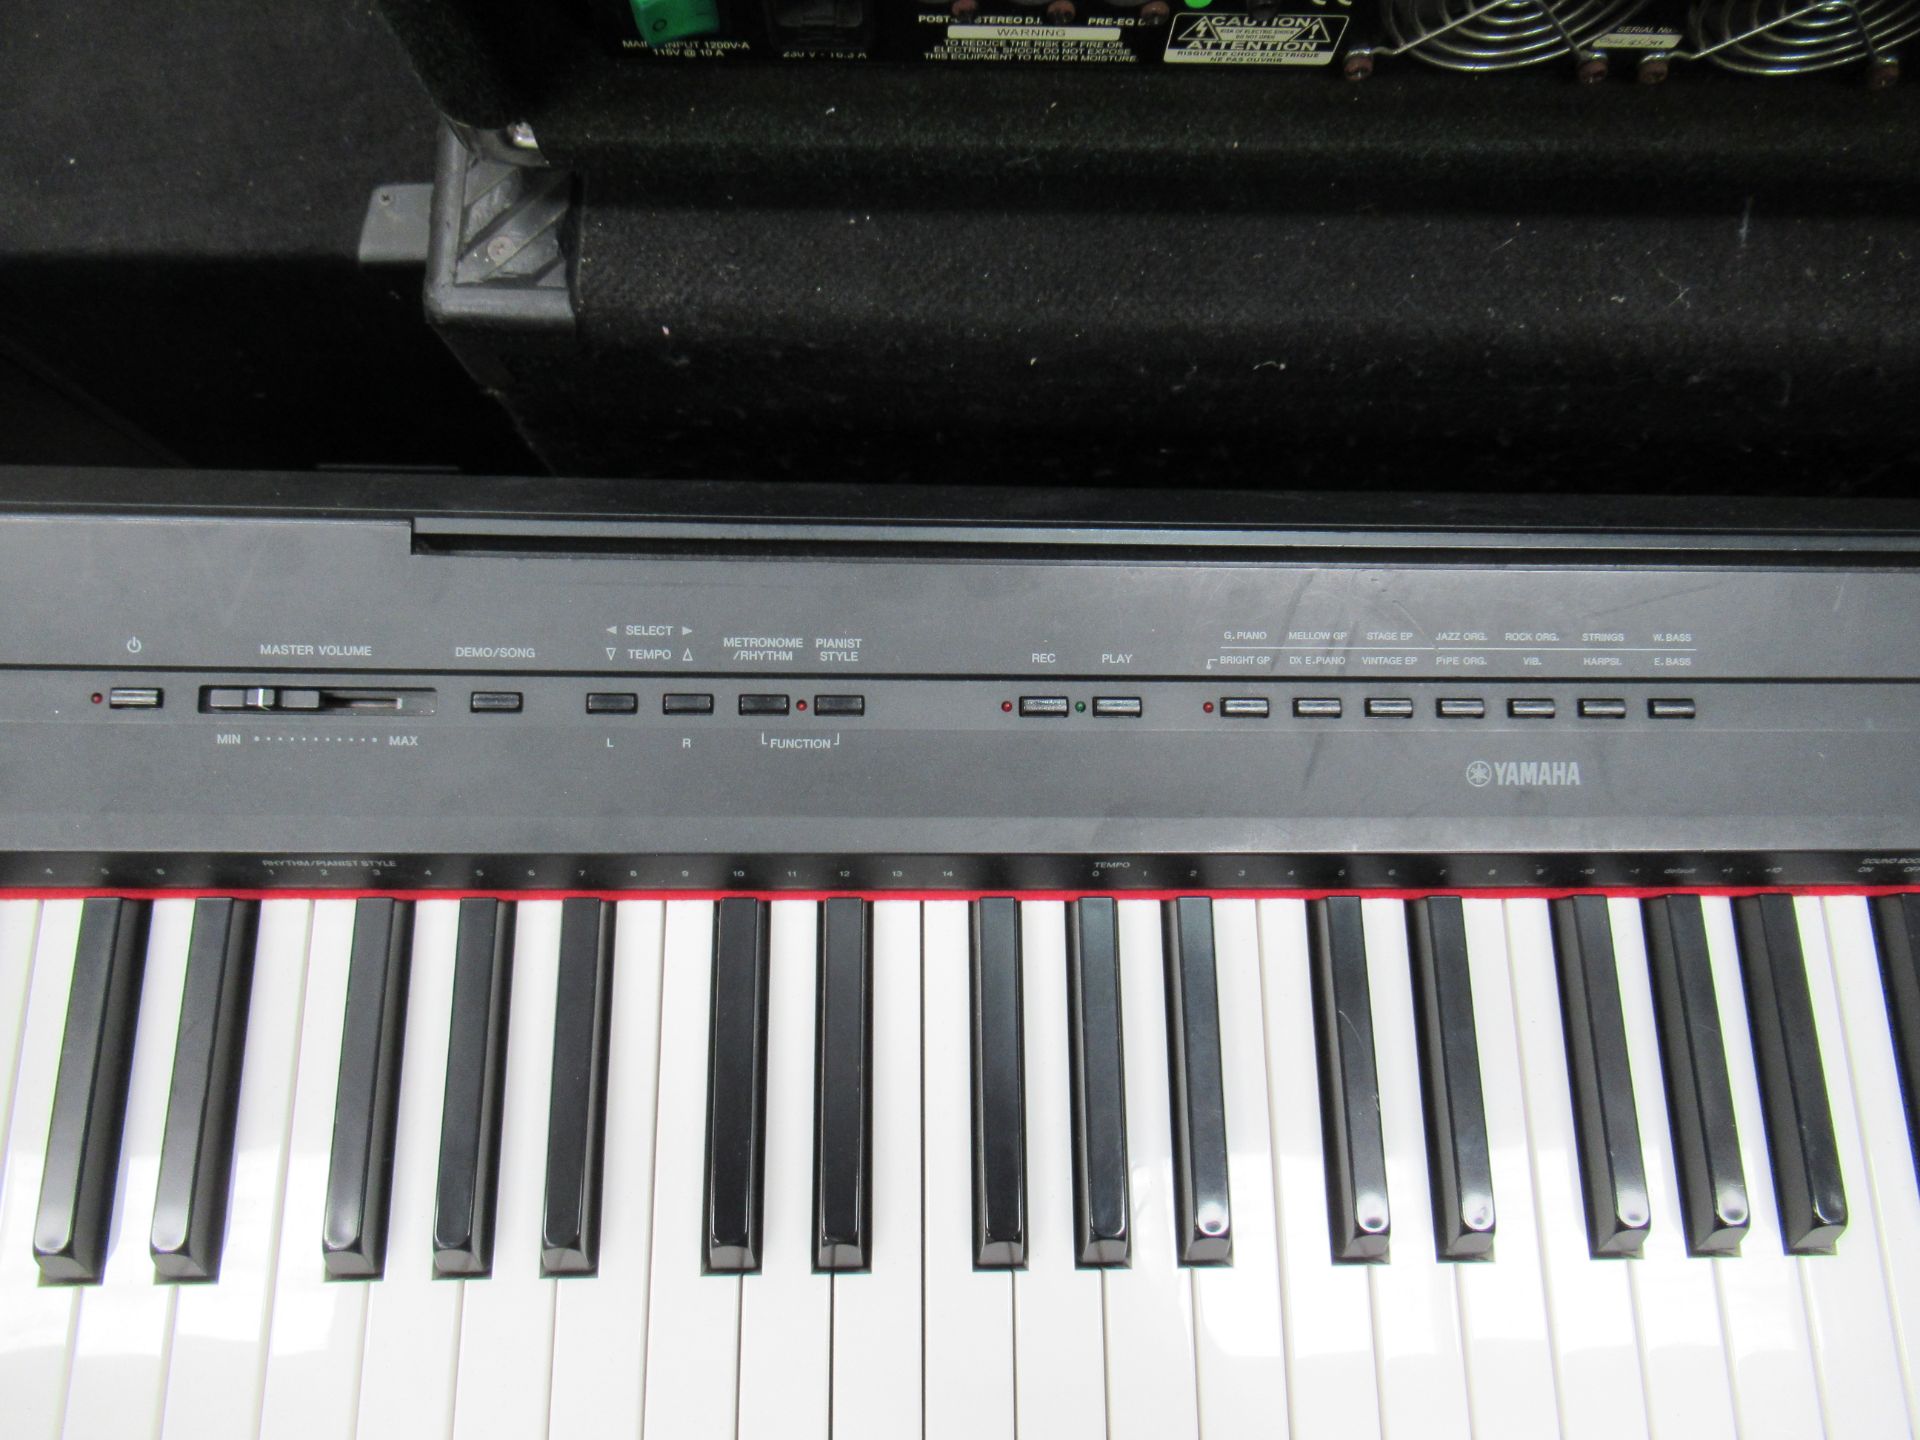 Yamaha 'Digital Piano' model P-115 - Image 4 of 5